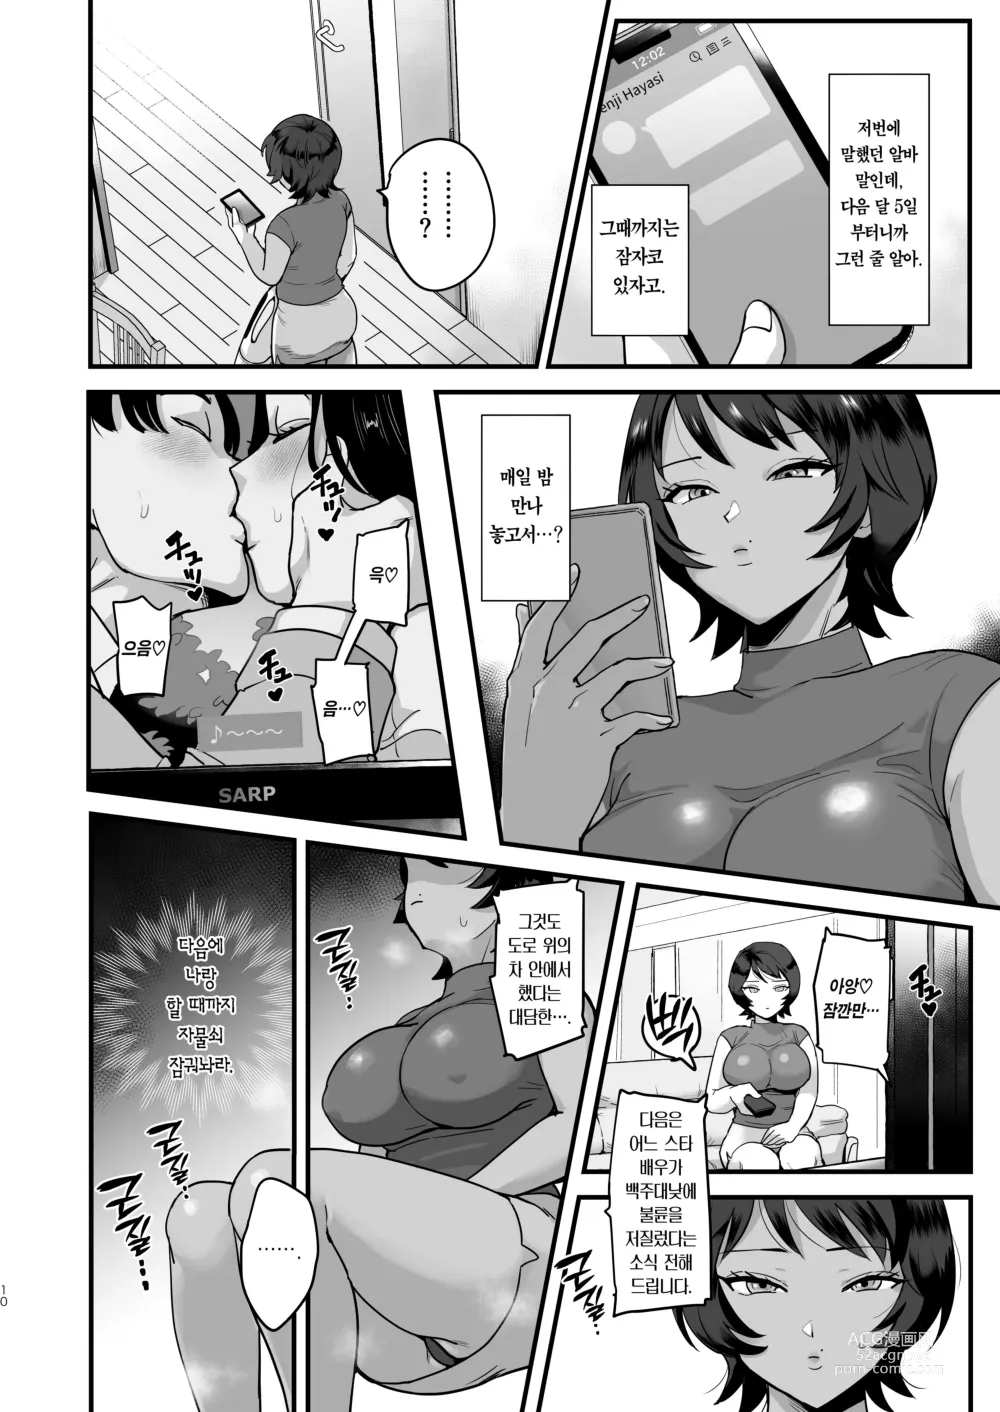 Page 9 of doujinshi 옛 동창의 섹프 격한 걸 좋아하는 료코 씨.